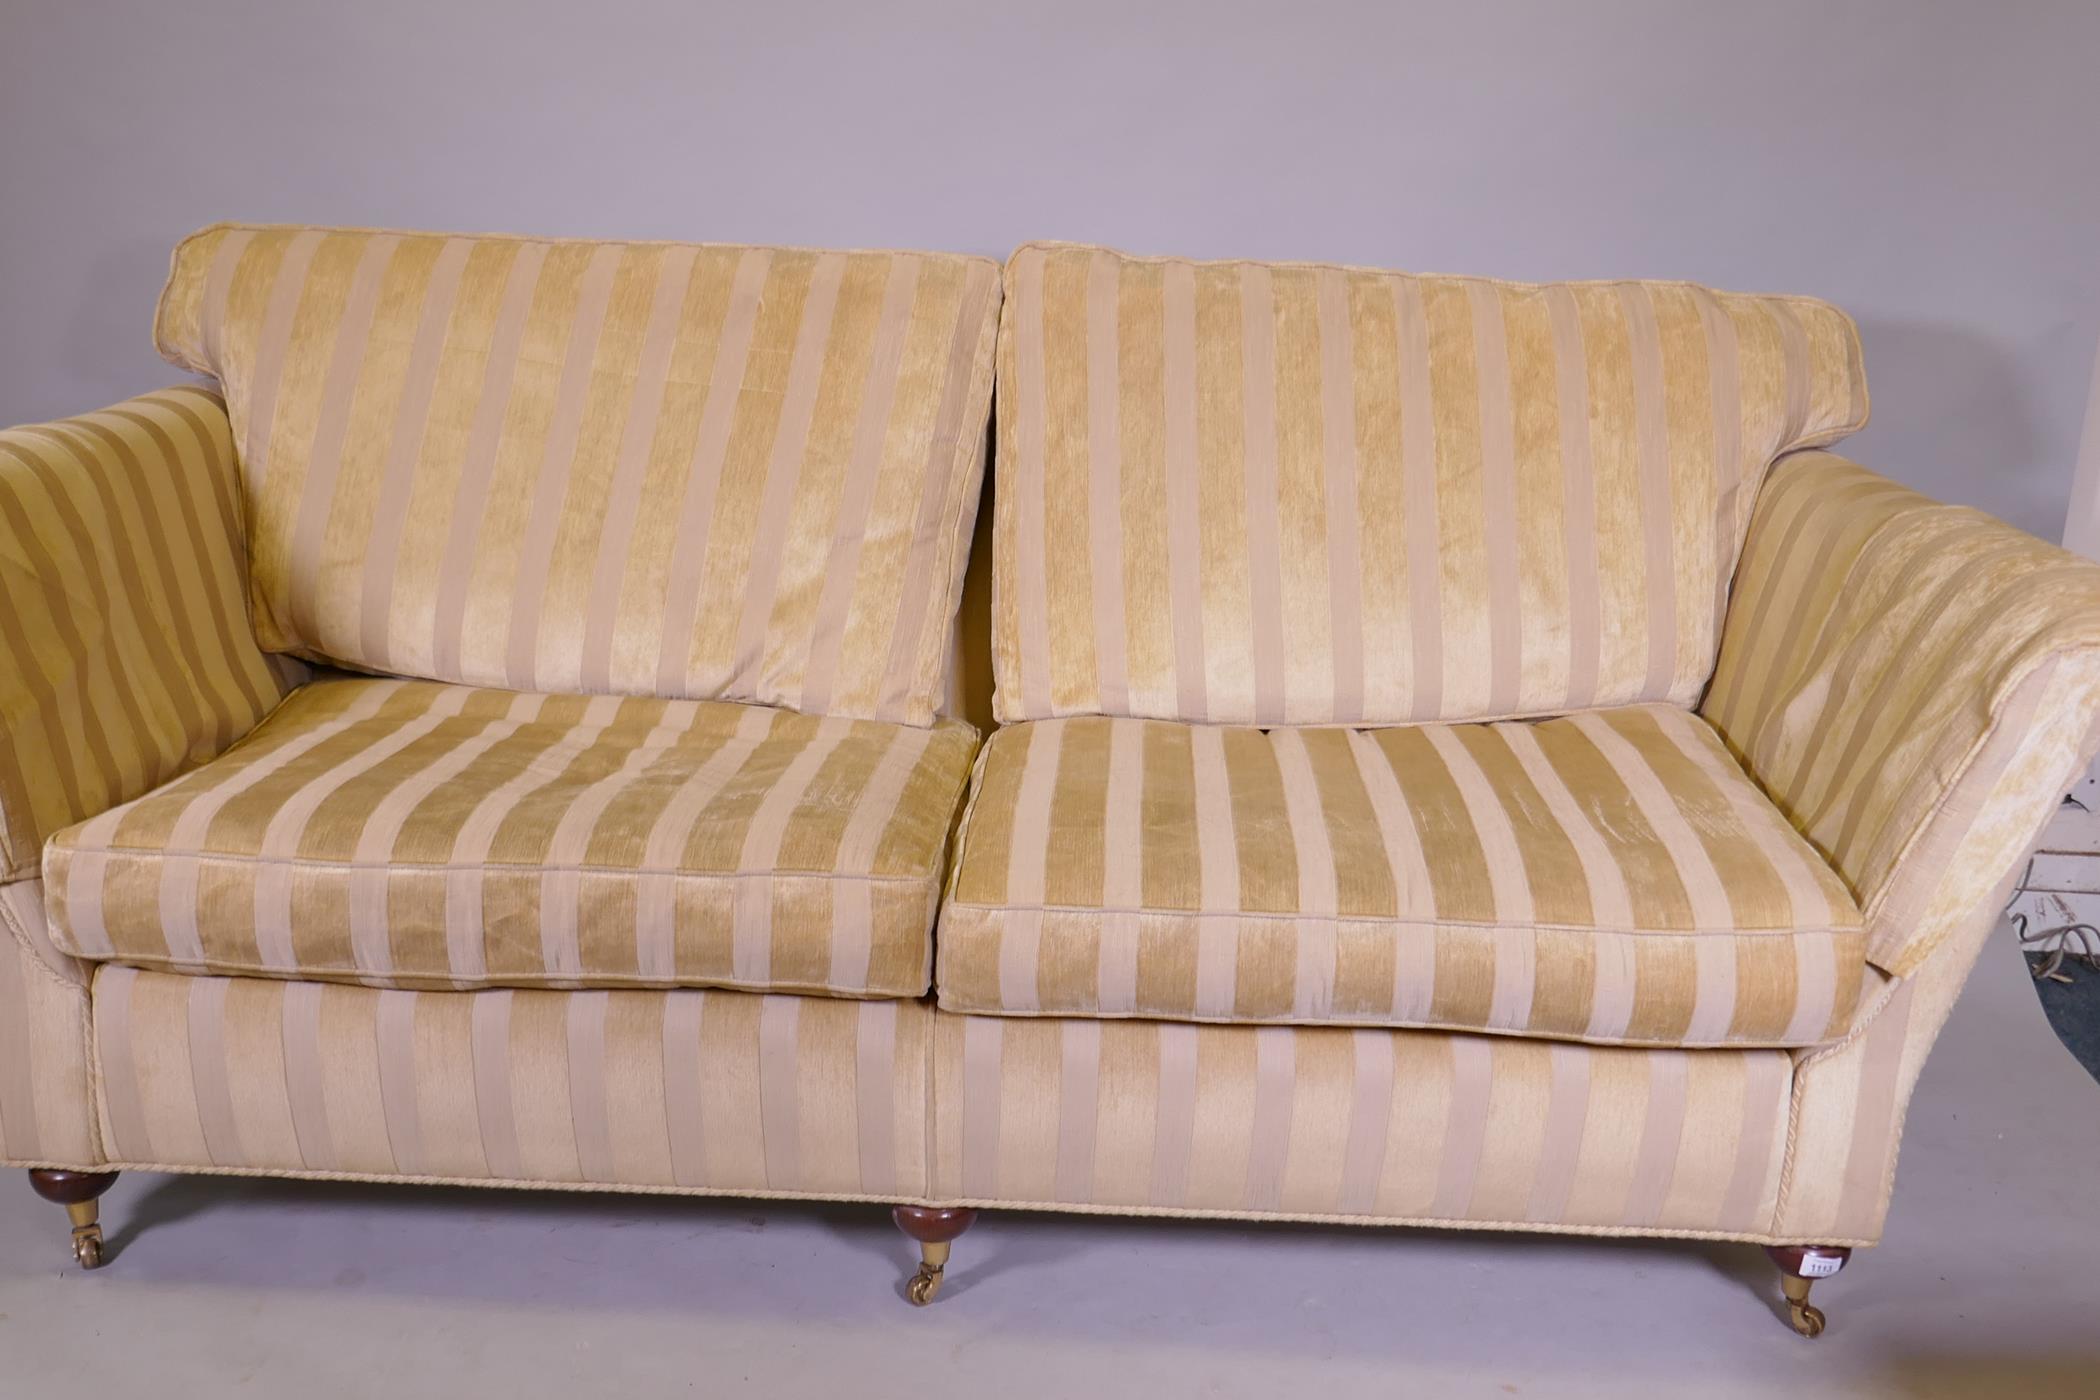 A Duresta sofa, 210cm wide - Image 2 of 4